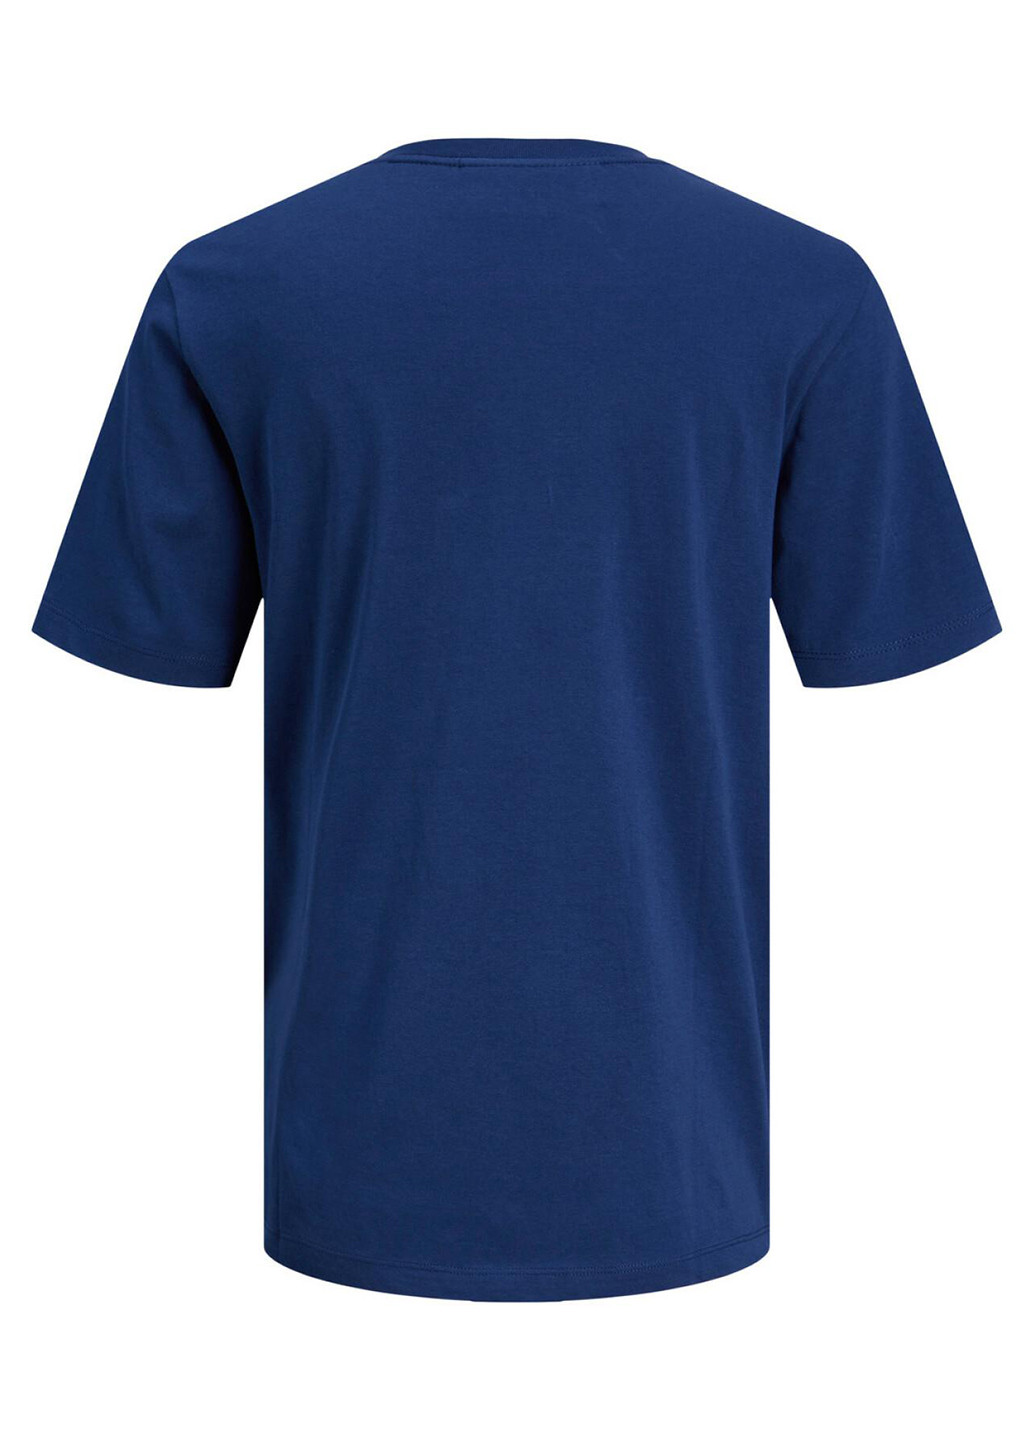 Темно-синяя летняя футболка JJXX